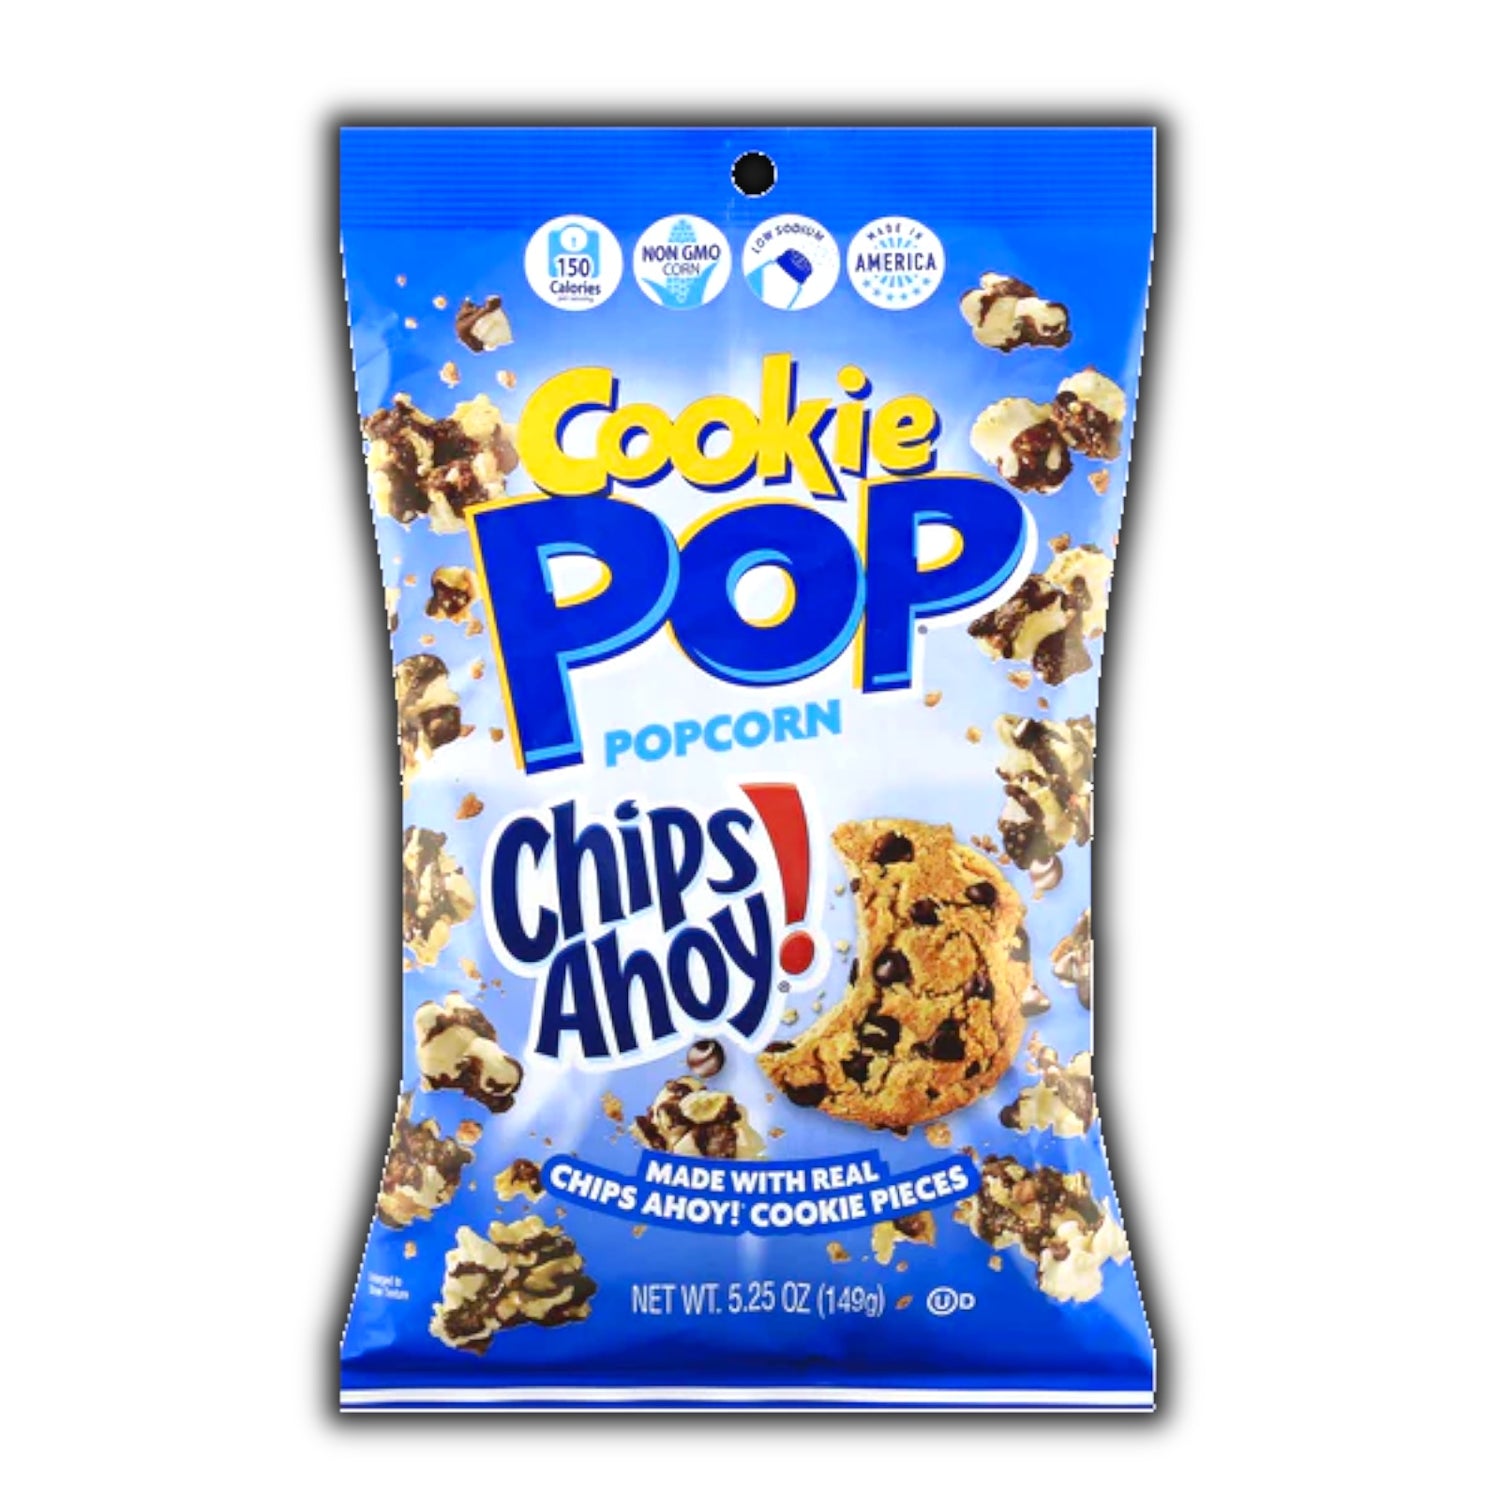 Cookie Pop Chips Ahoy Popcorn 149g